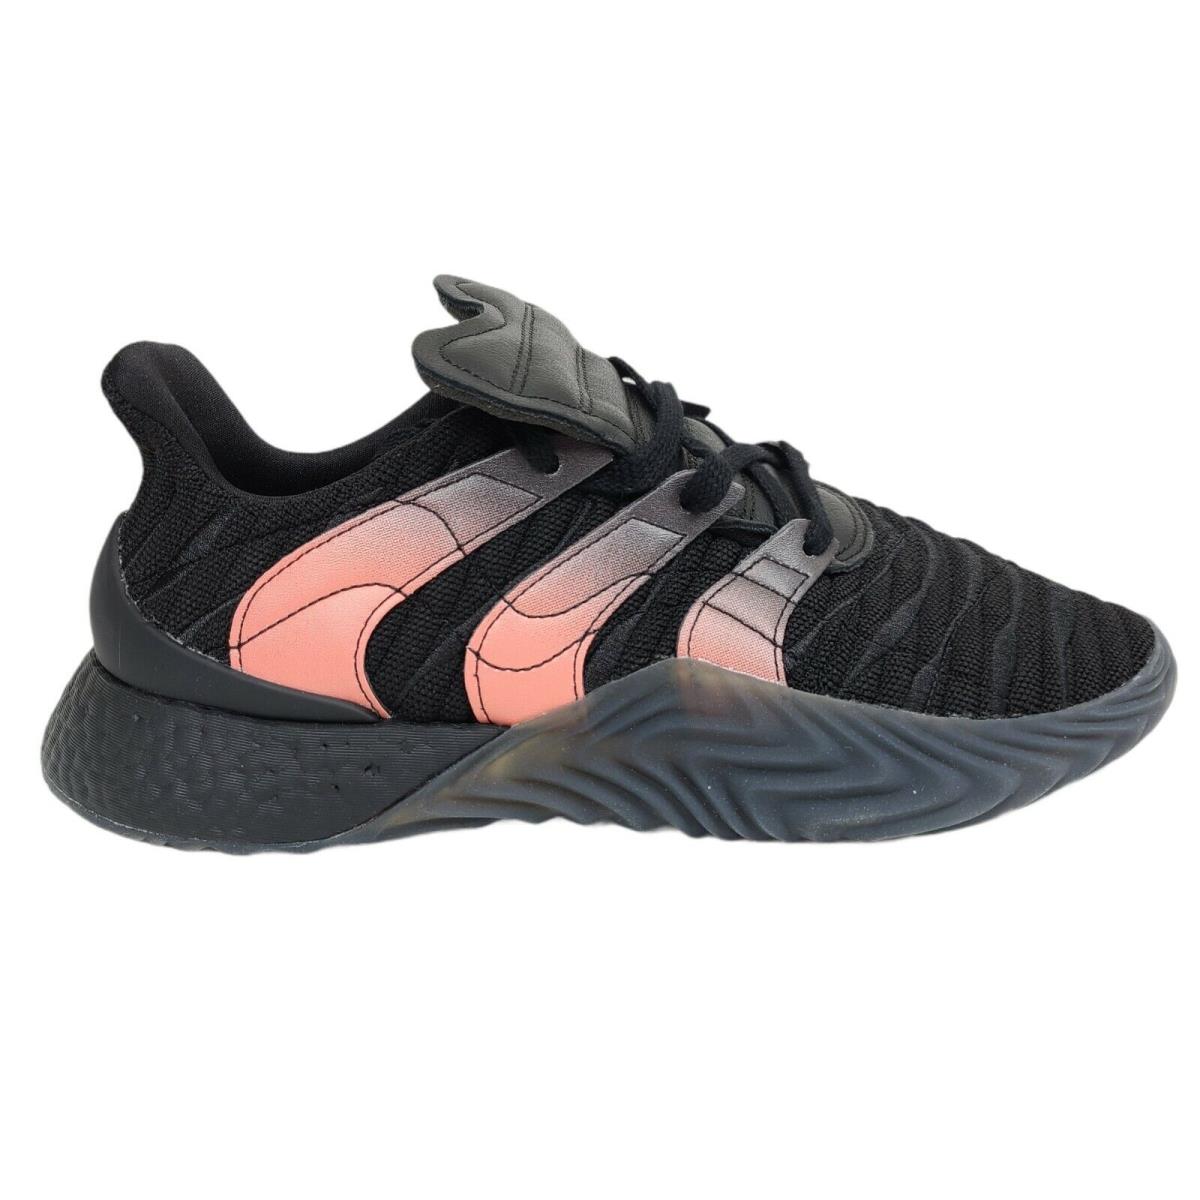 Adidas Originals Mens 10 Sobakov 2.0 Boost Black Lifestyle Sneakers Shoes EE5632 - Black , core black/solar orange/core black Manufacturer